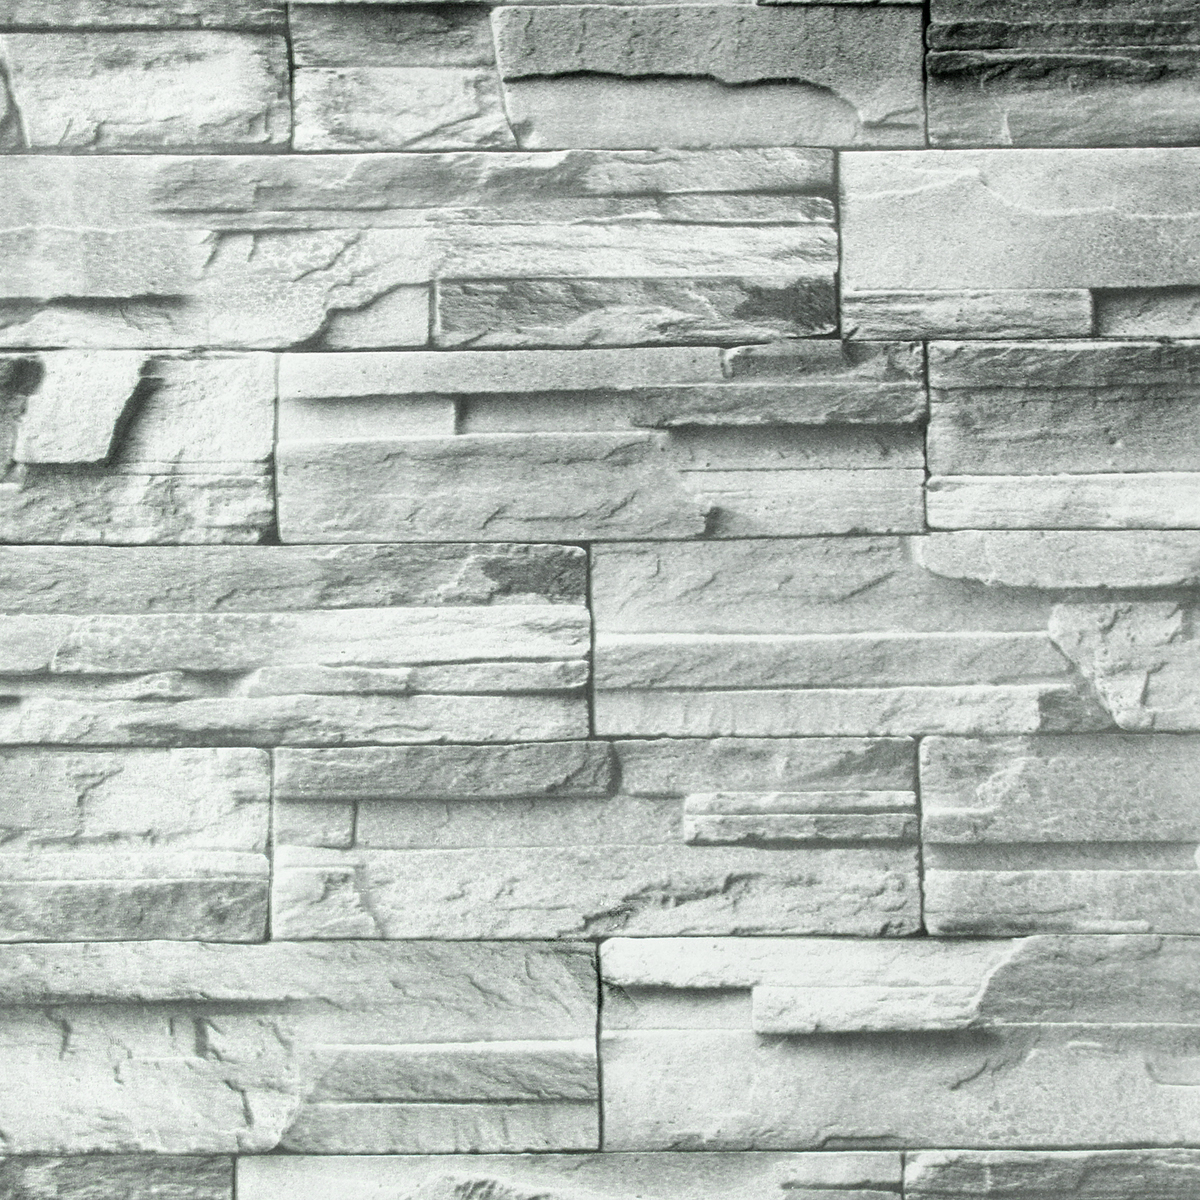 10m-Rustic-Grey-Brick-Self-Adhesive-Wallpaper-Home-Living-Room-Decoration-Wall-Sticker-Roll-1249471